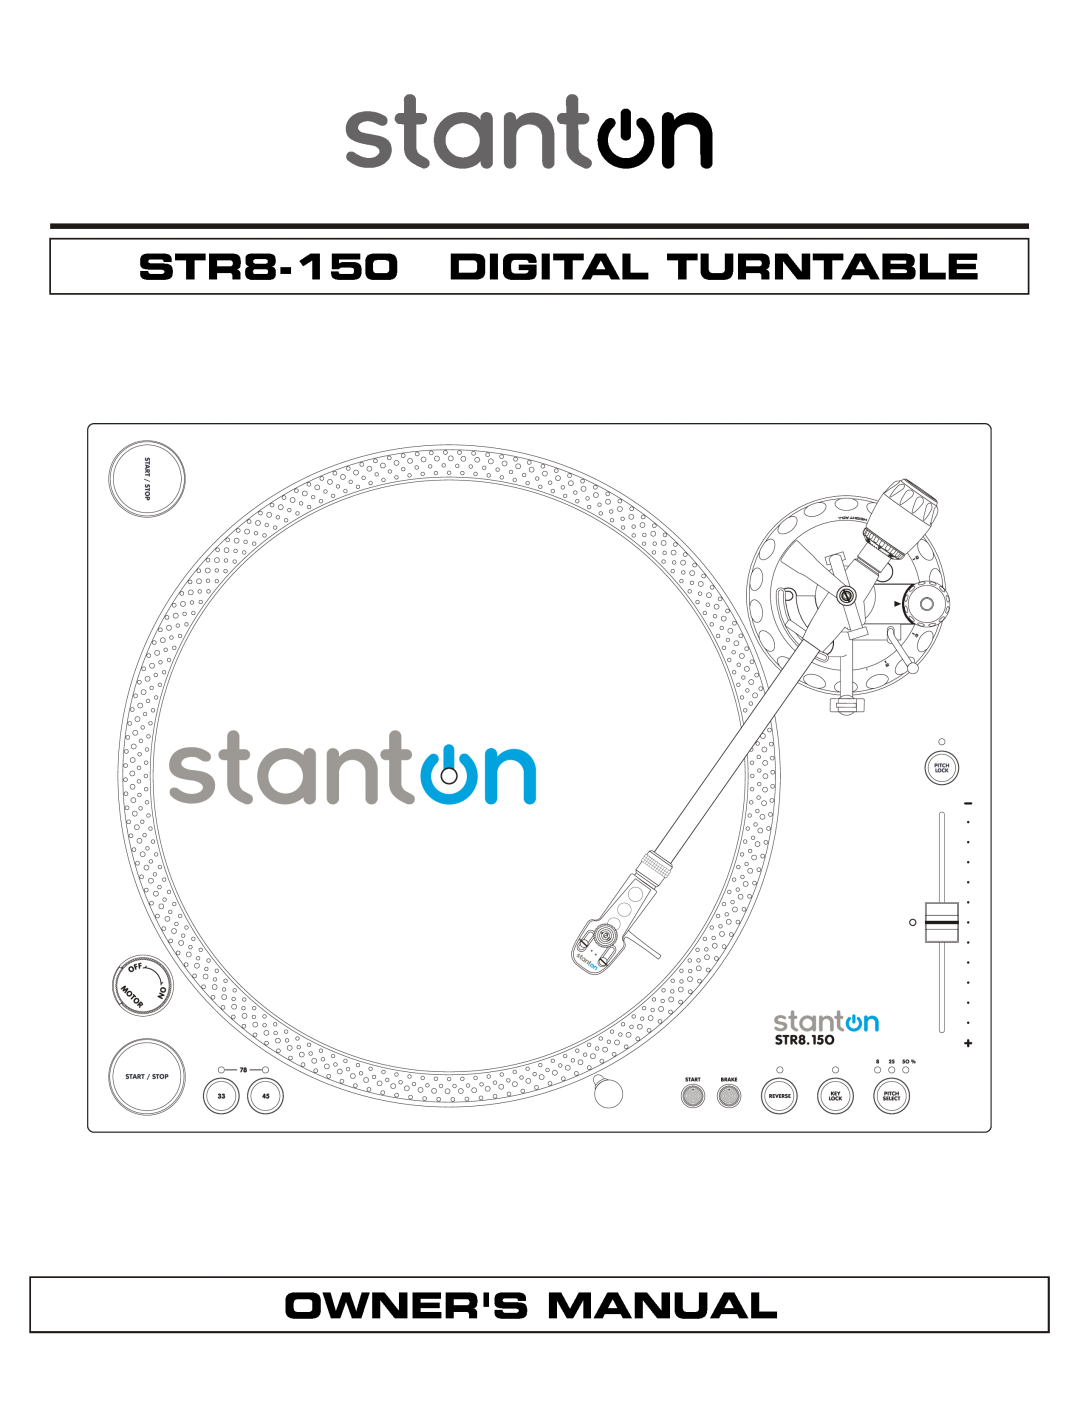 Stanton owner manual STR8-150DIGITAL TURNTABLE, +2 g 